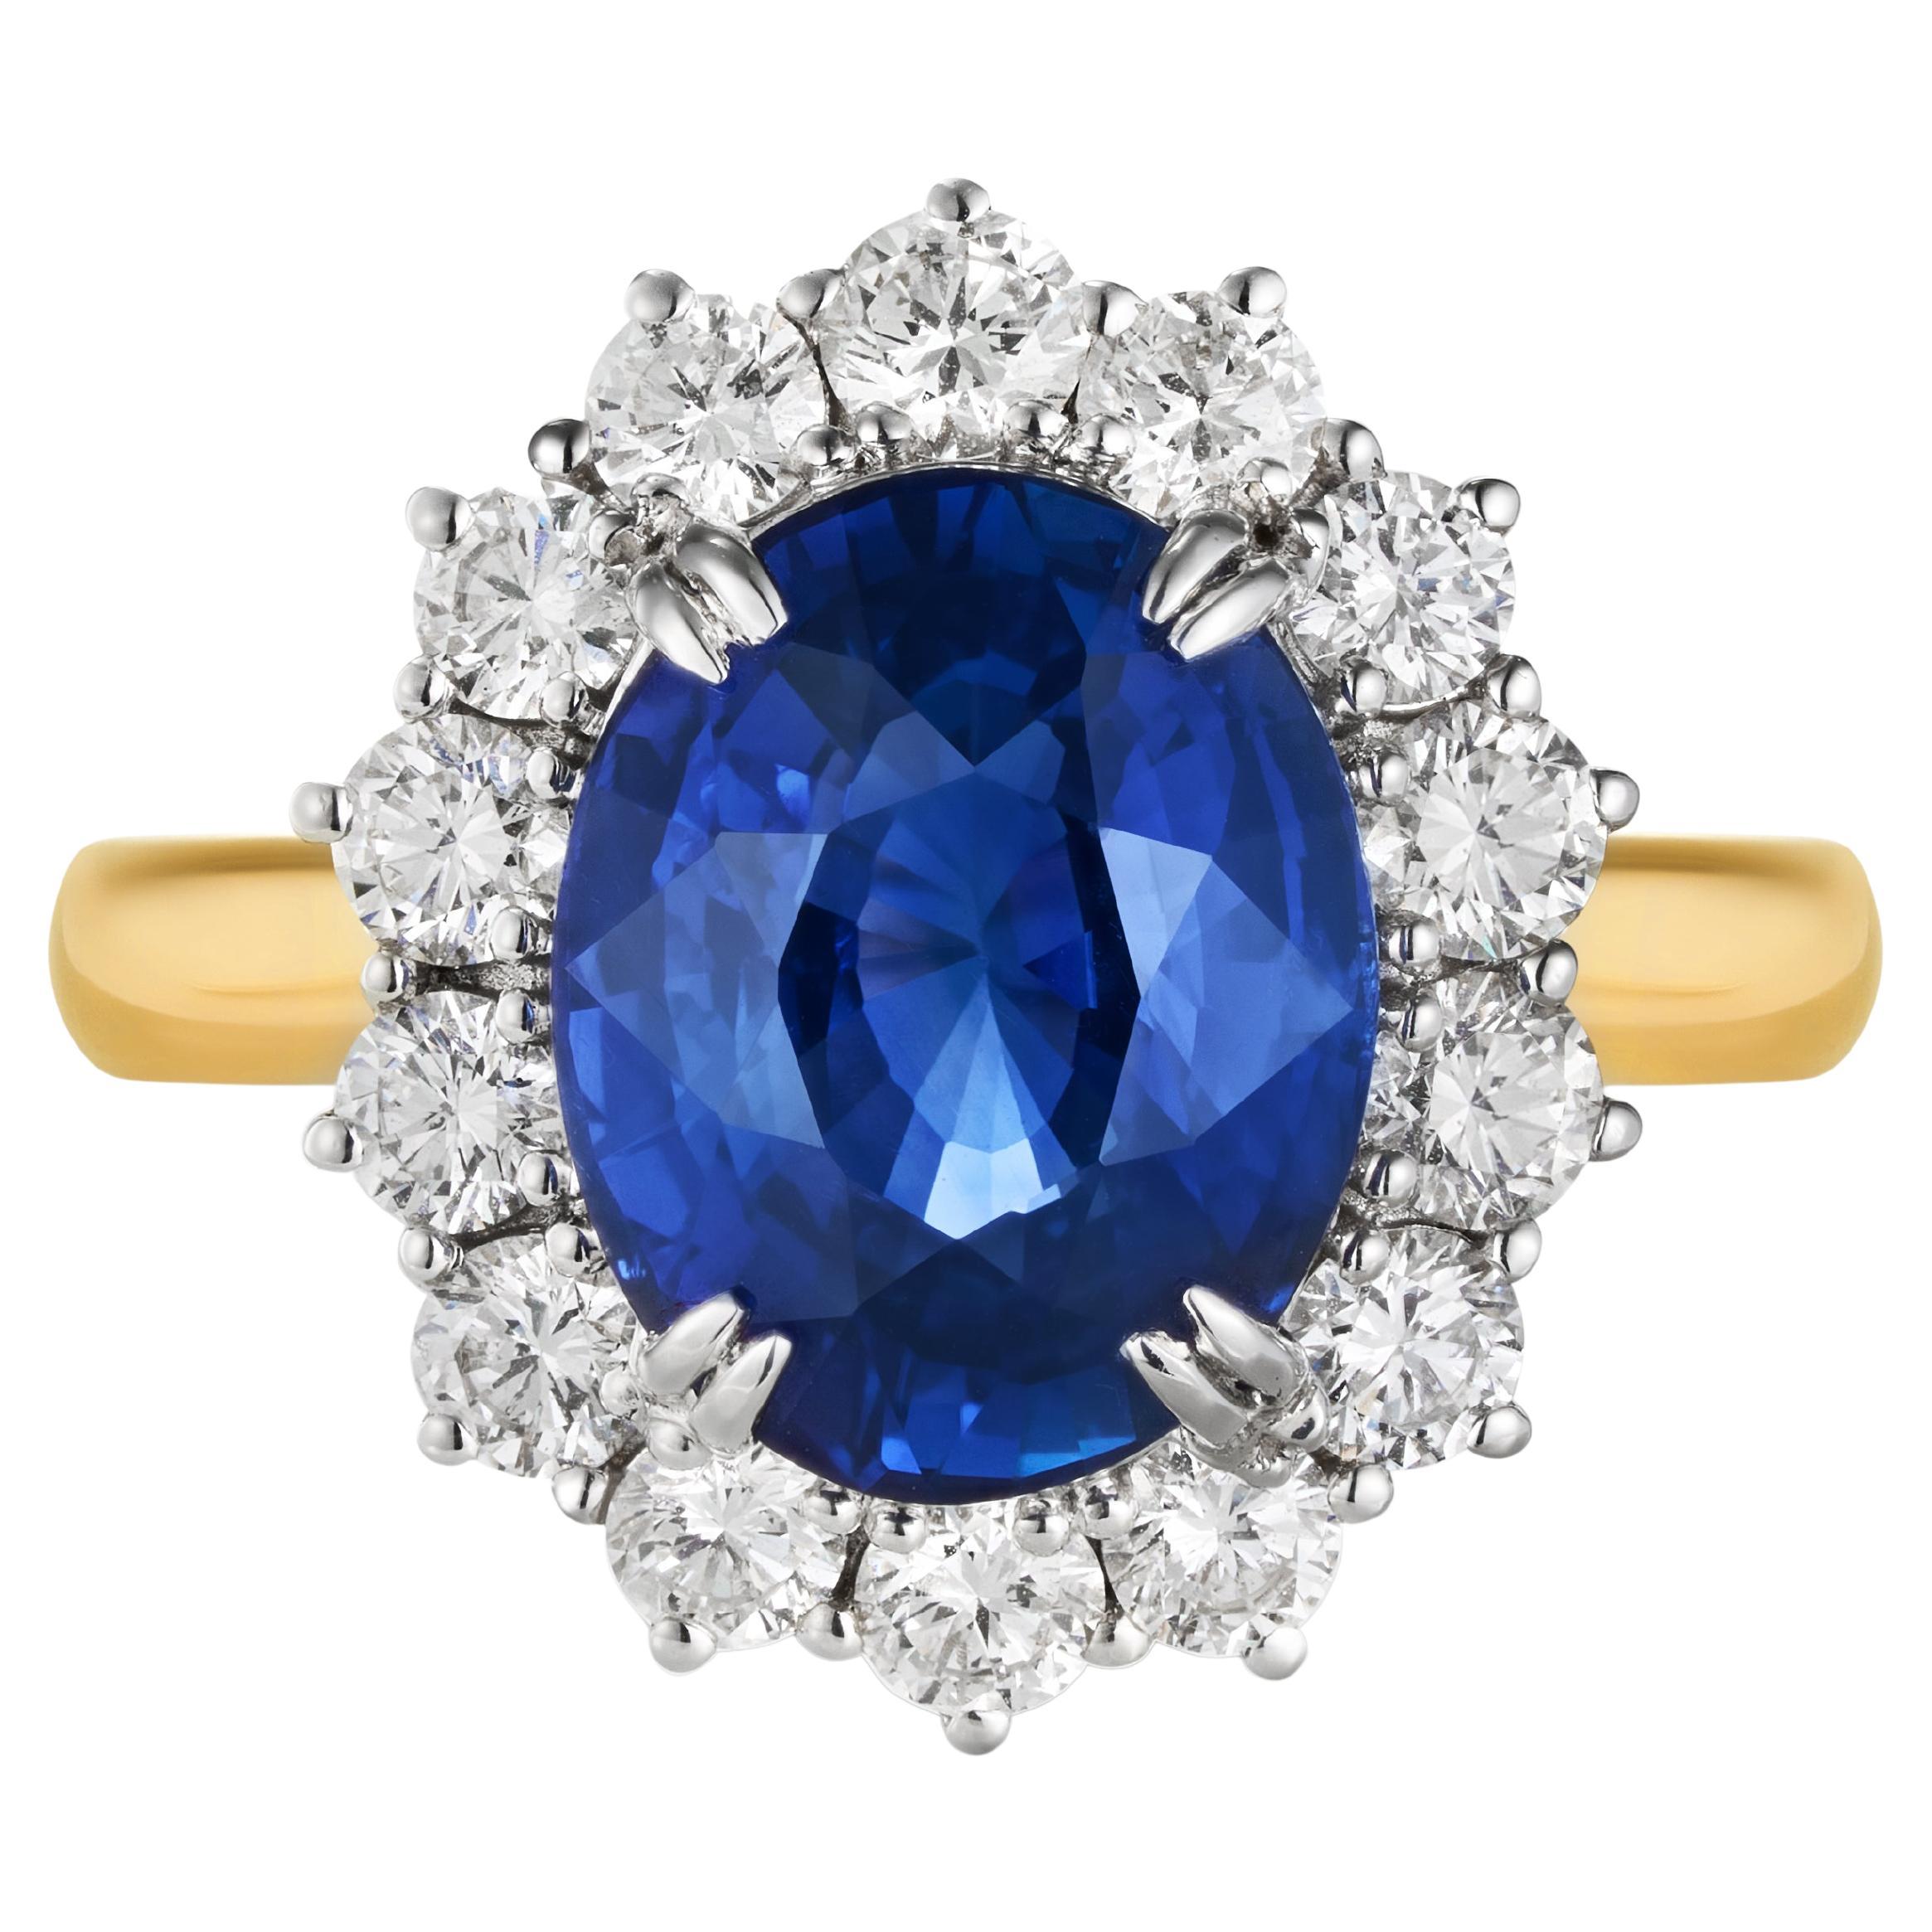 5 Carat Natural Royal Blue Sapphire Diamond Ring